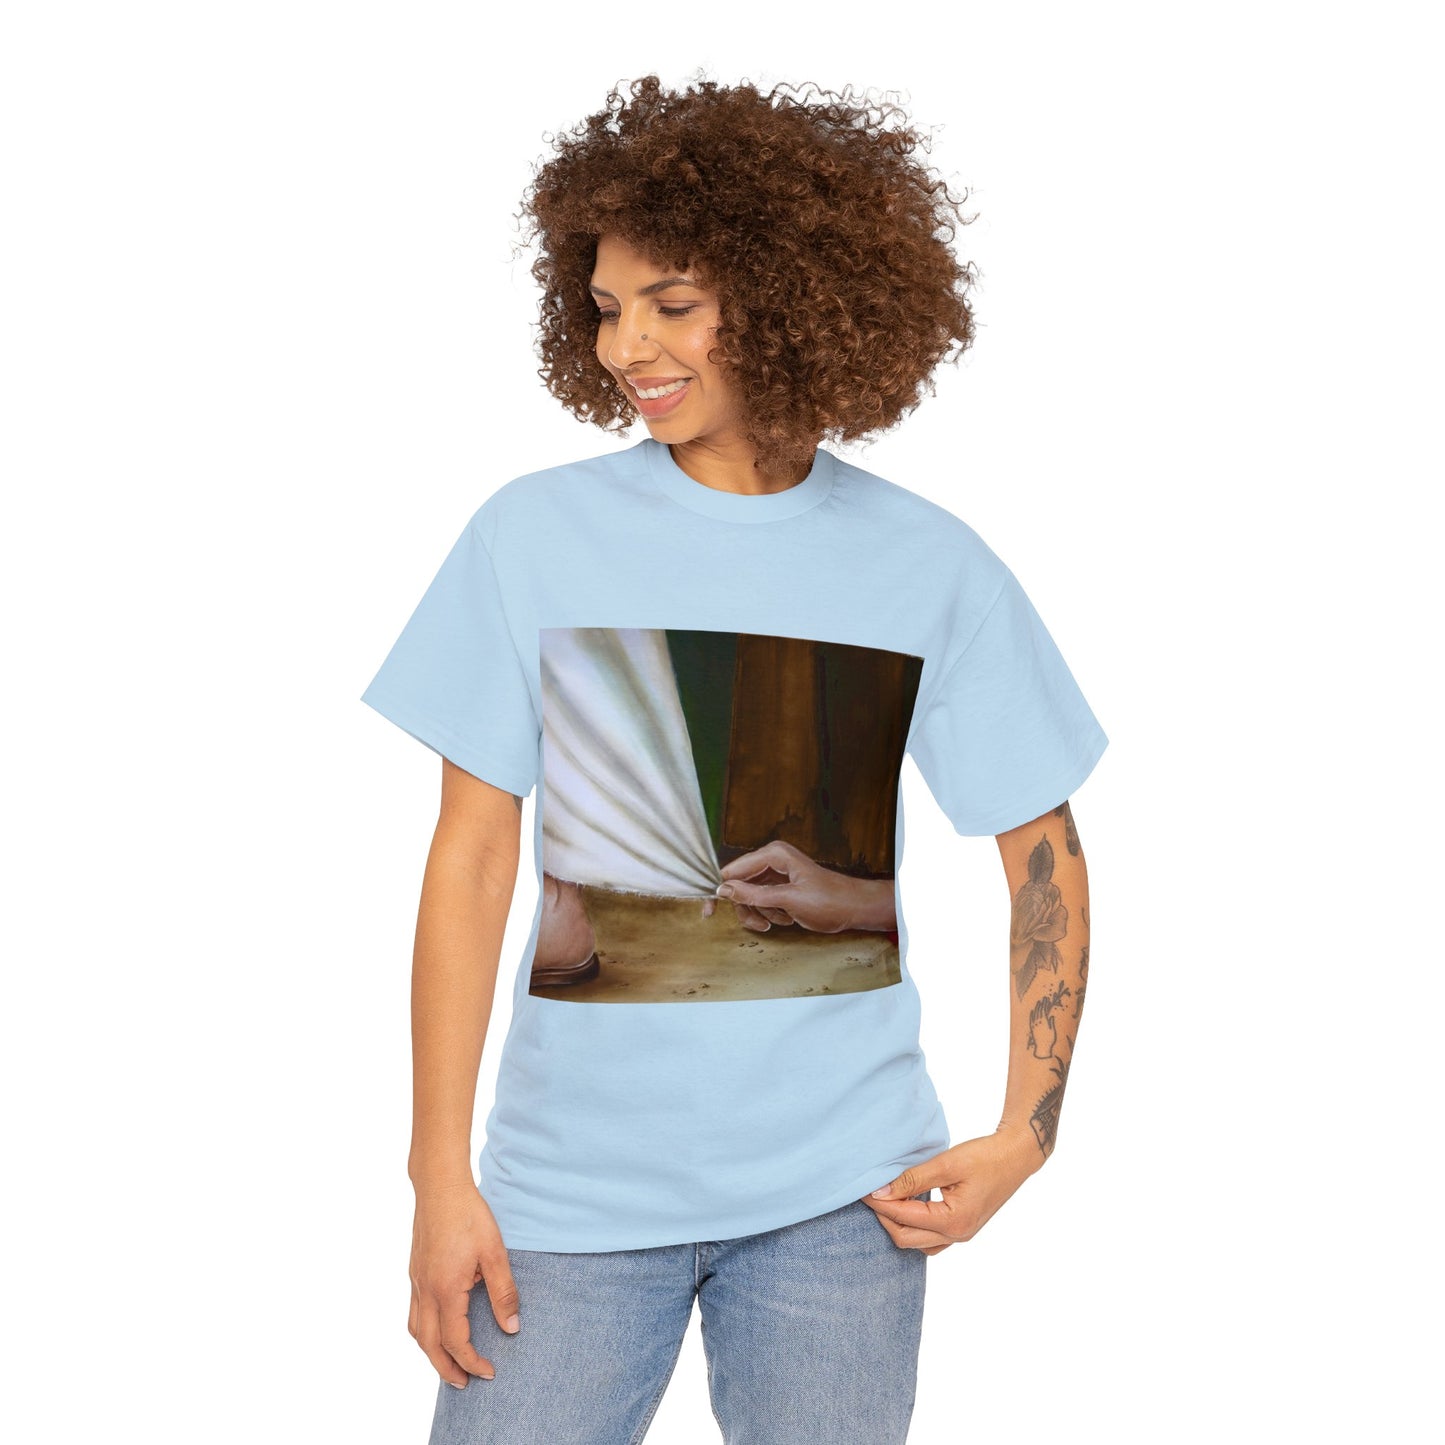 The Healing Touch t-shirt